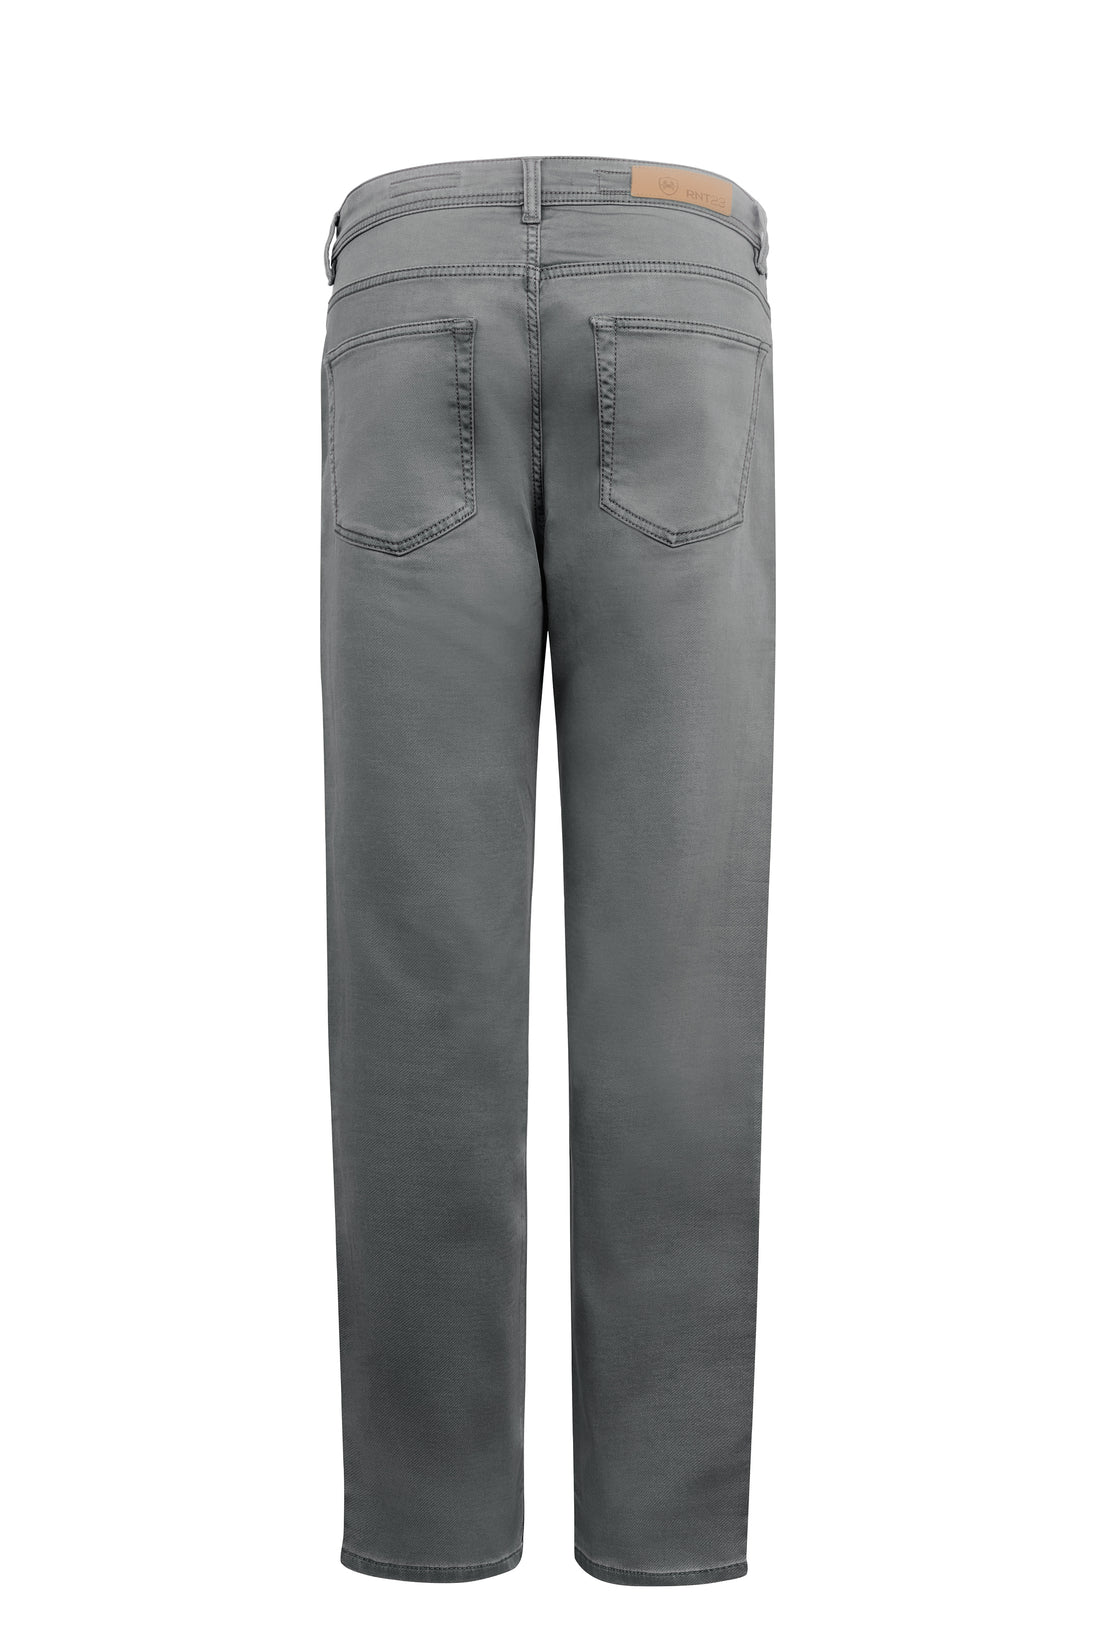 Super Soft 5-pocket Style Pants - Grey